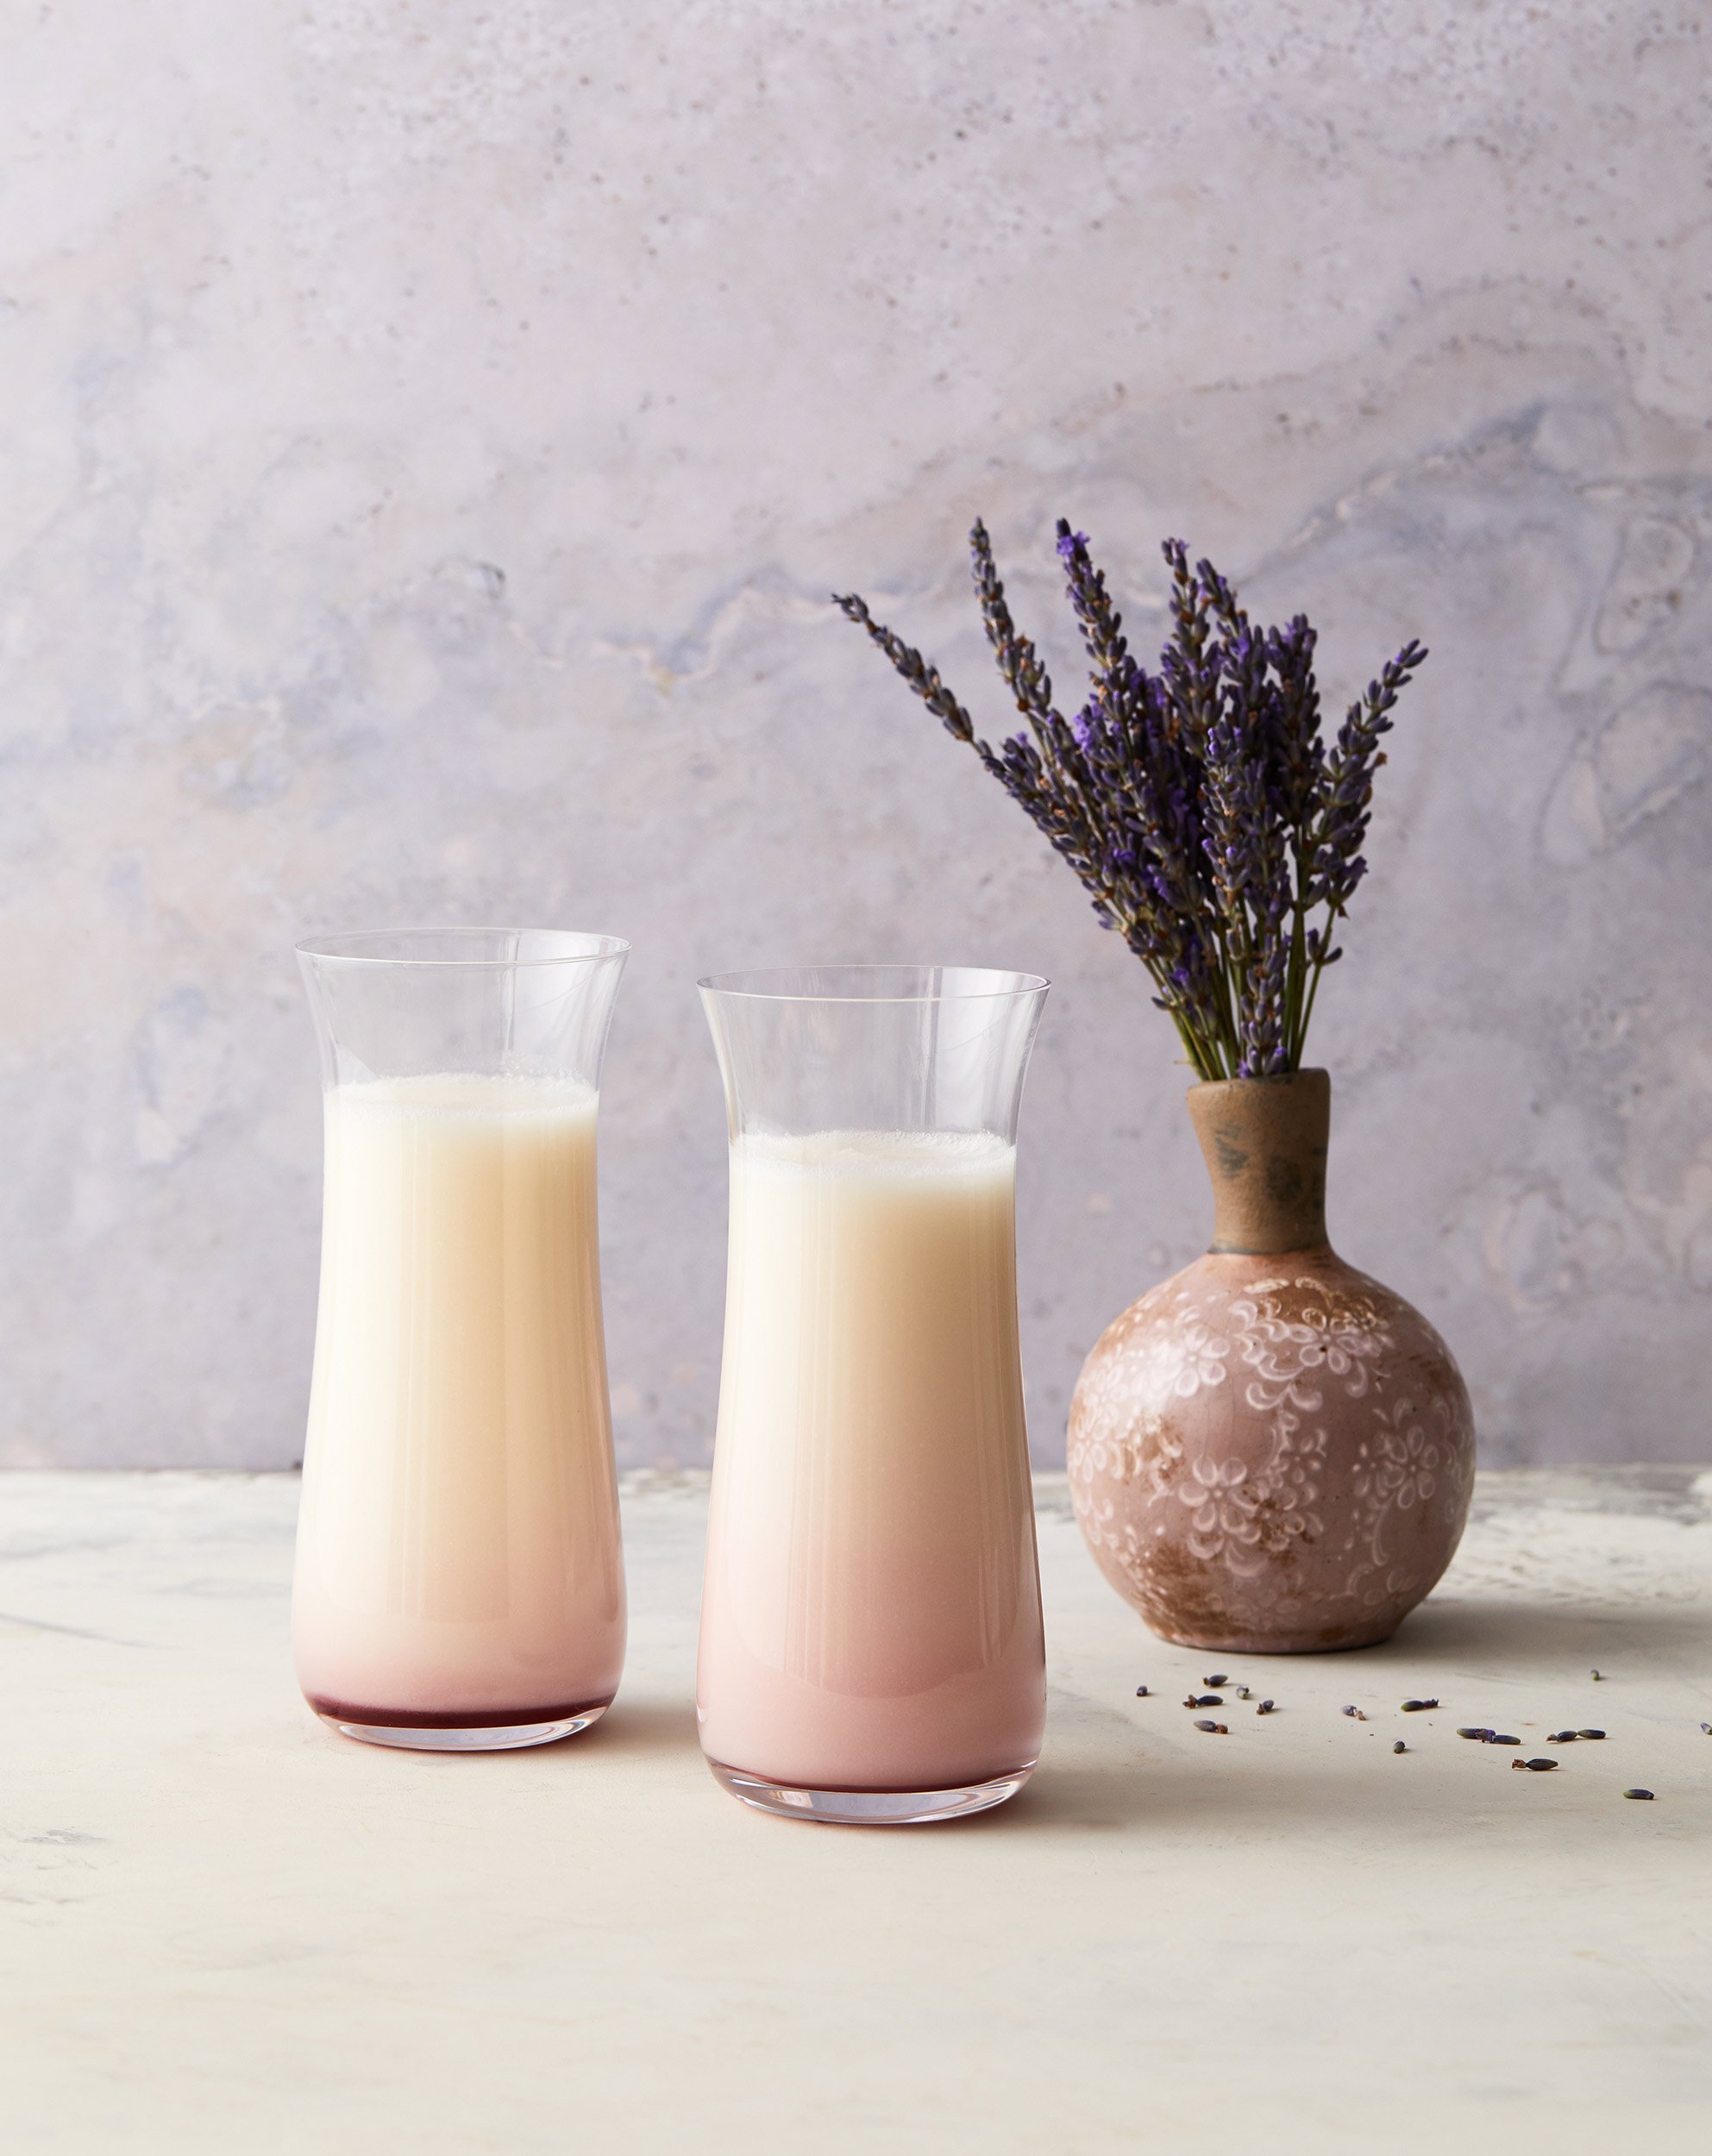 nyc-nj-cookbook-photographer-food-joy-of-balance-divya-alter-lavender.jpg